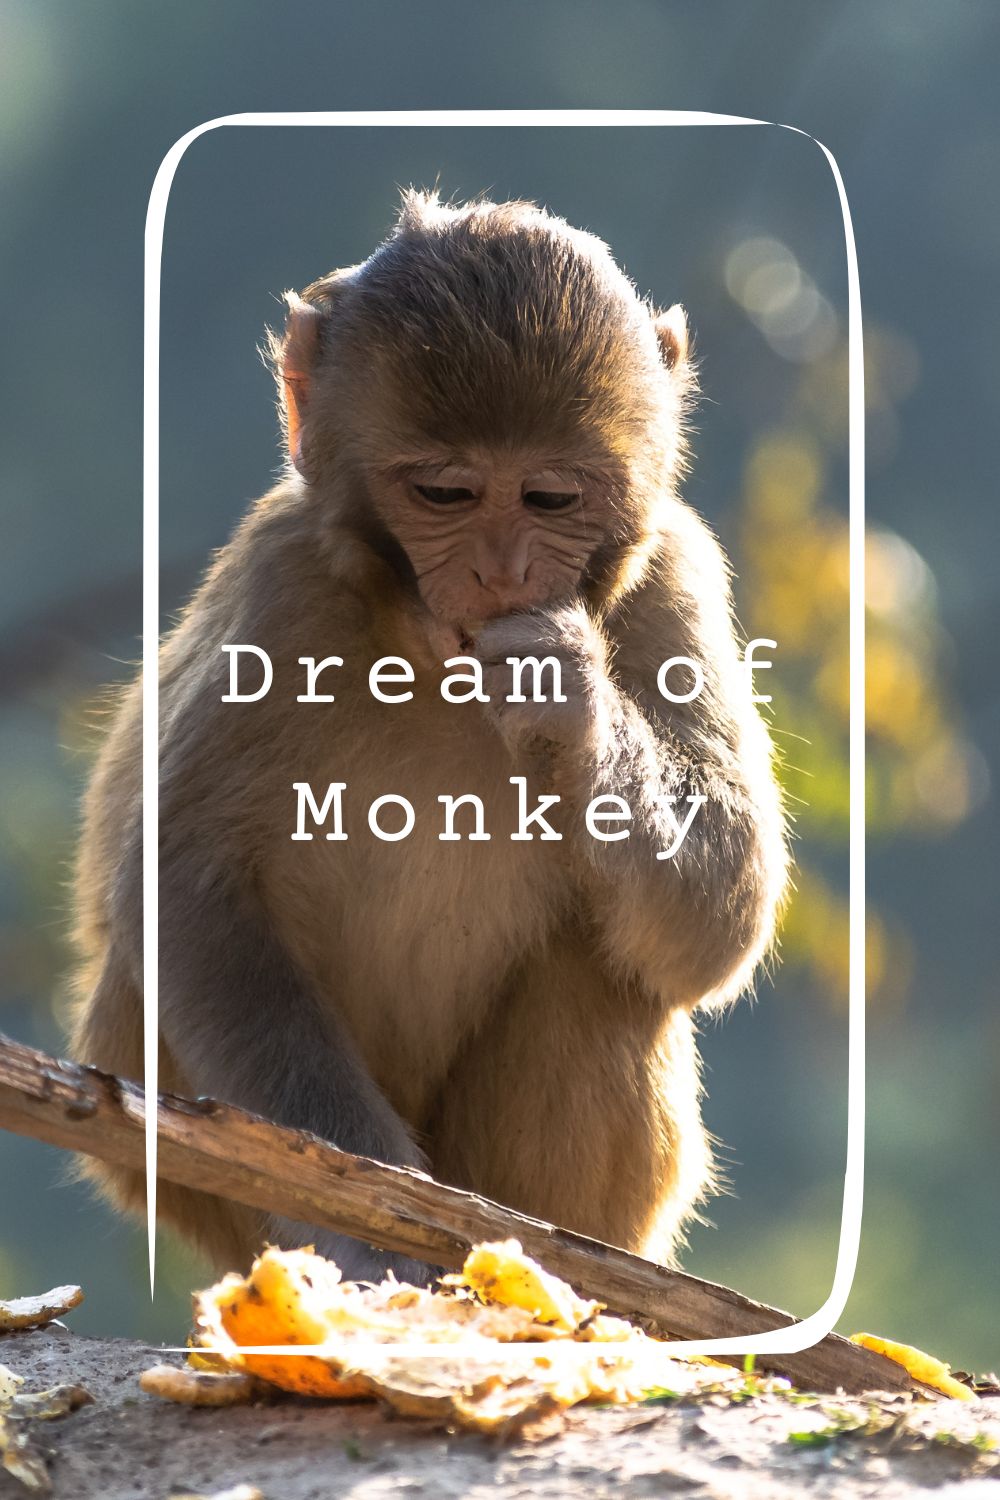 17 Dream of Monkey Meanings4